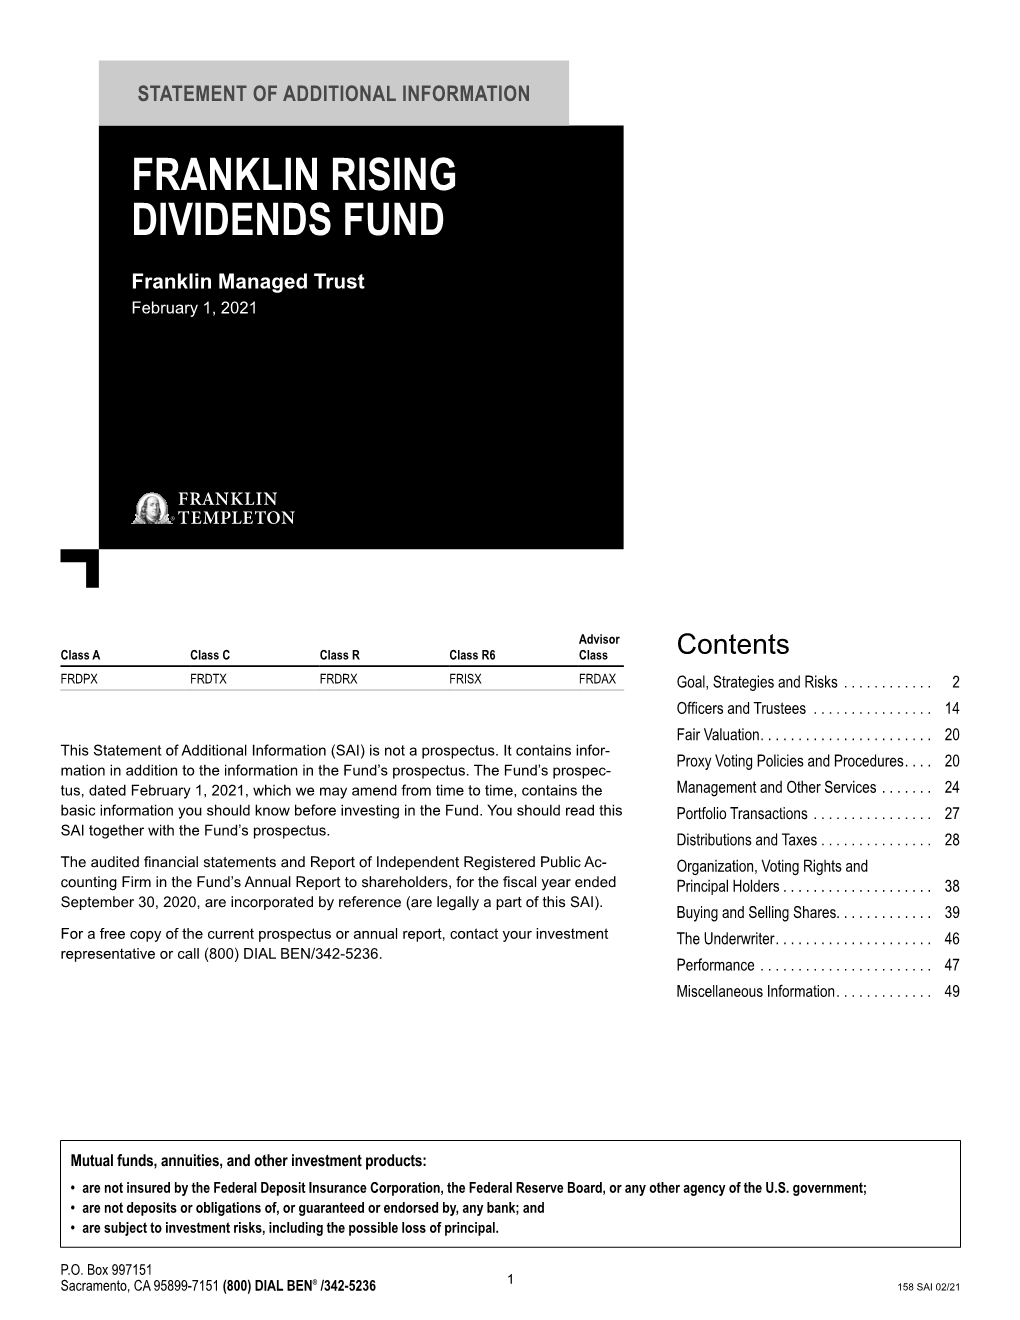 Franklin Rising Dividends Fund